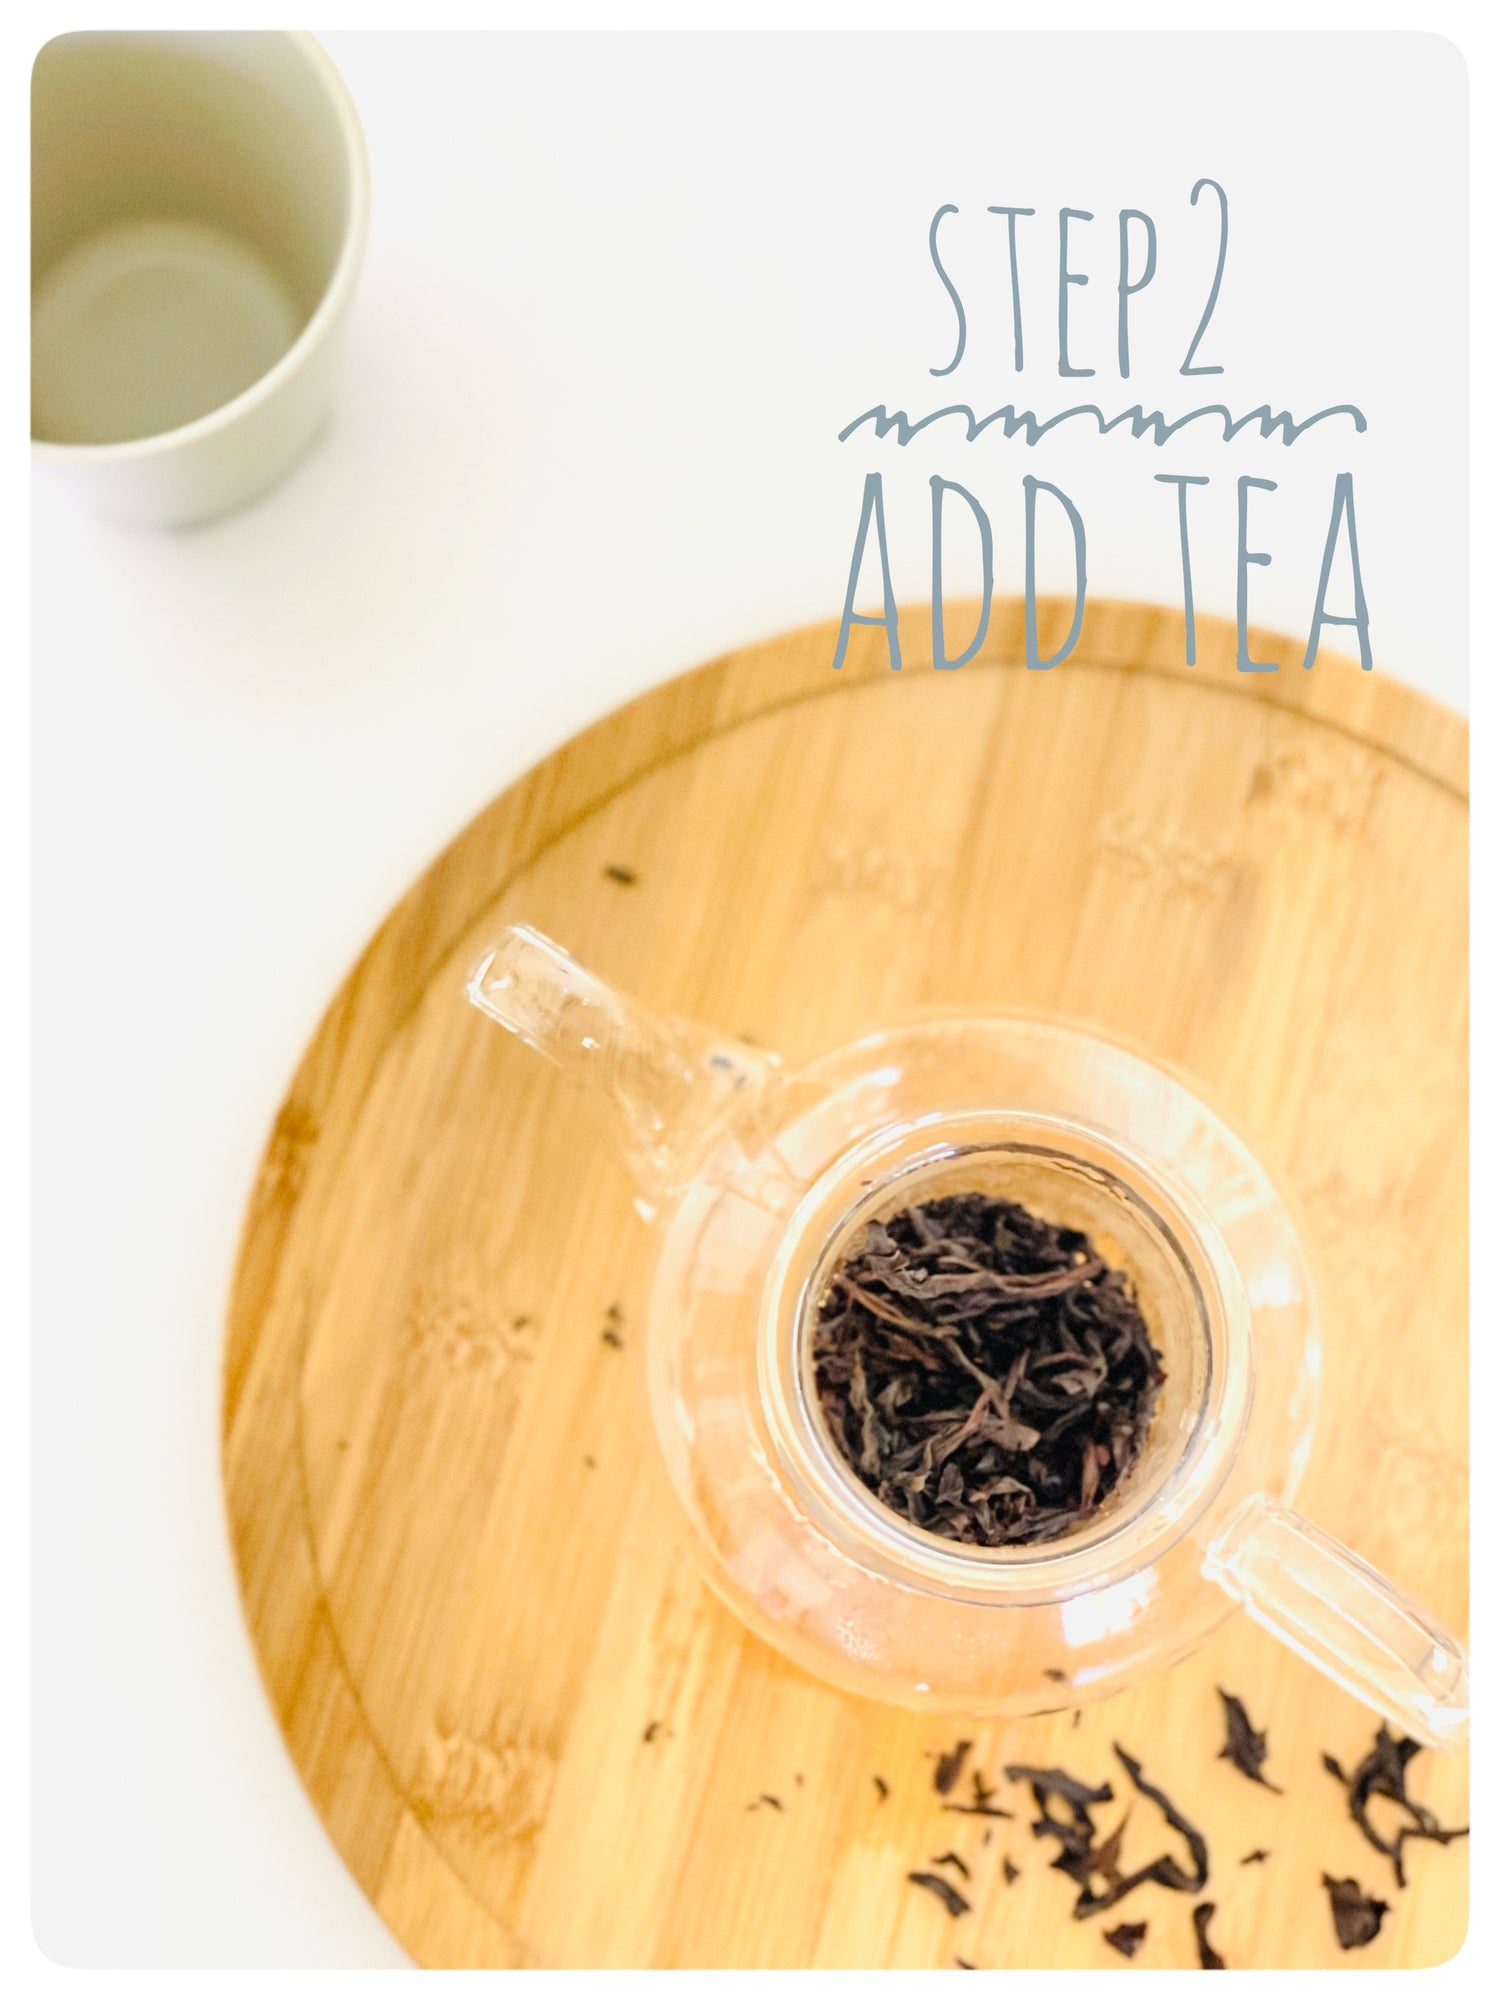 How to brew loose leaf tea